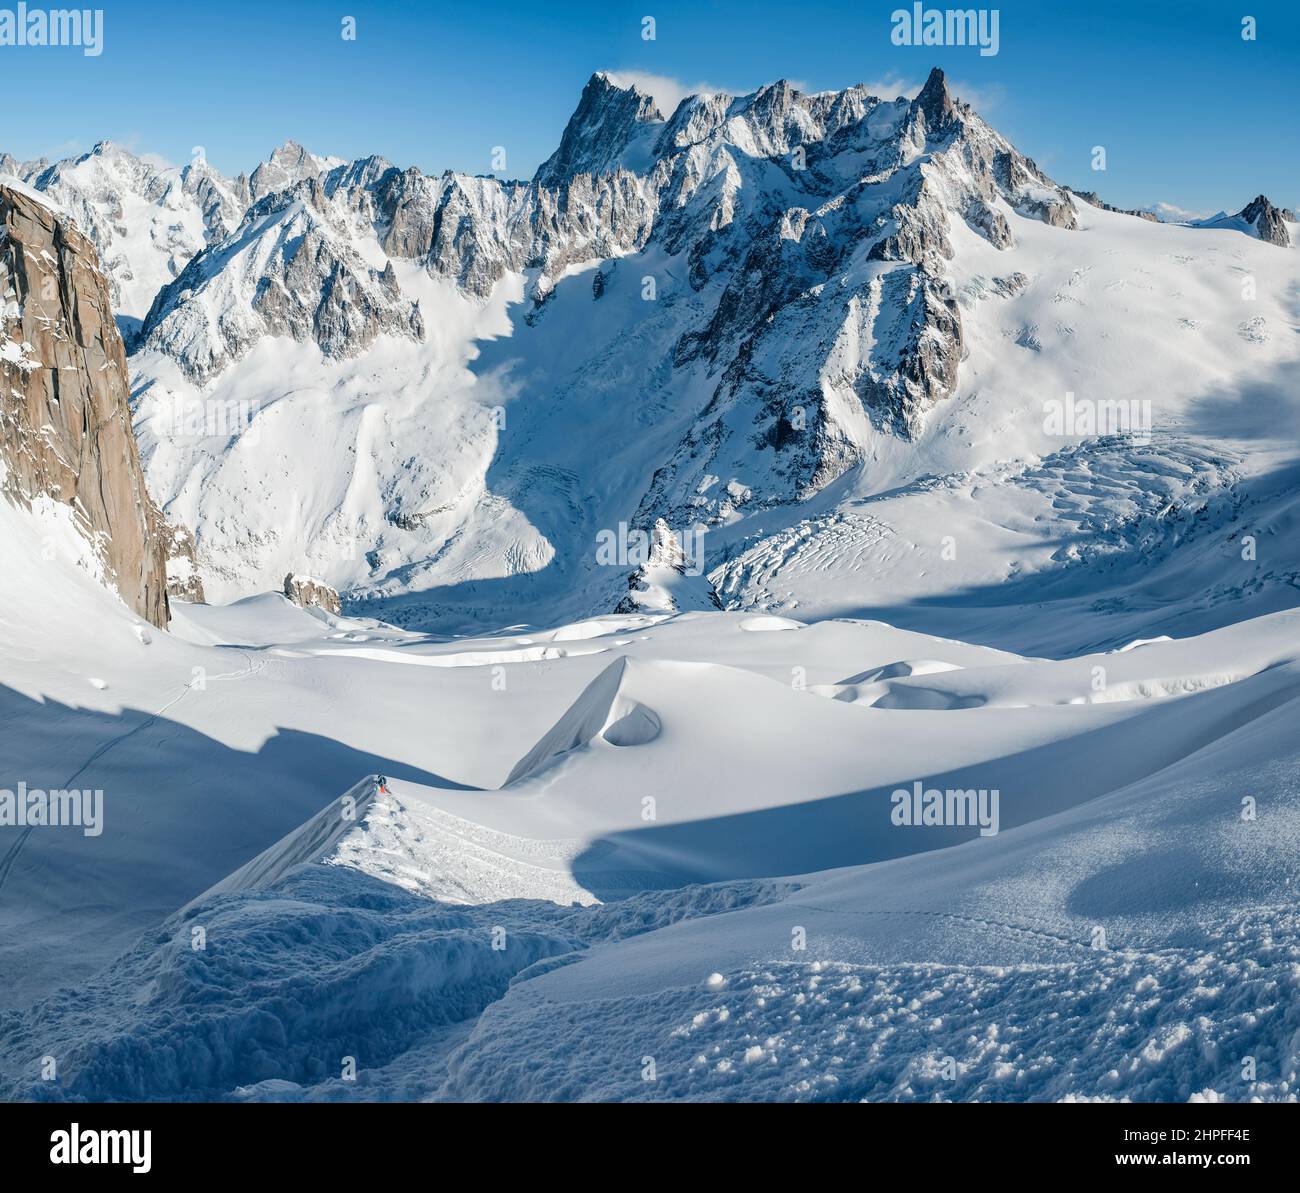 Glacier skiing at Grand Envers, Vallee Blanche, Chamonix, France Stock Photo